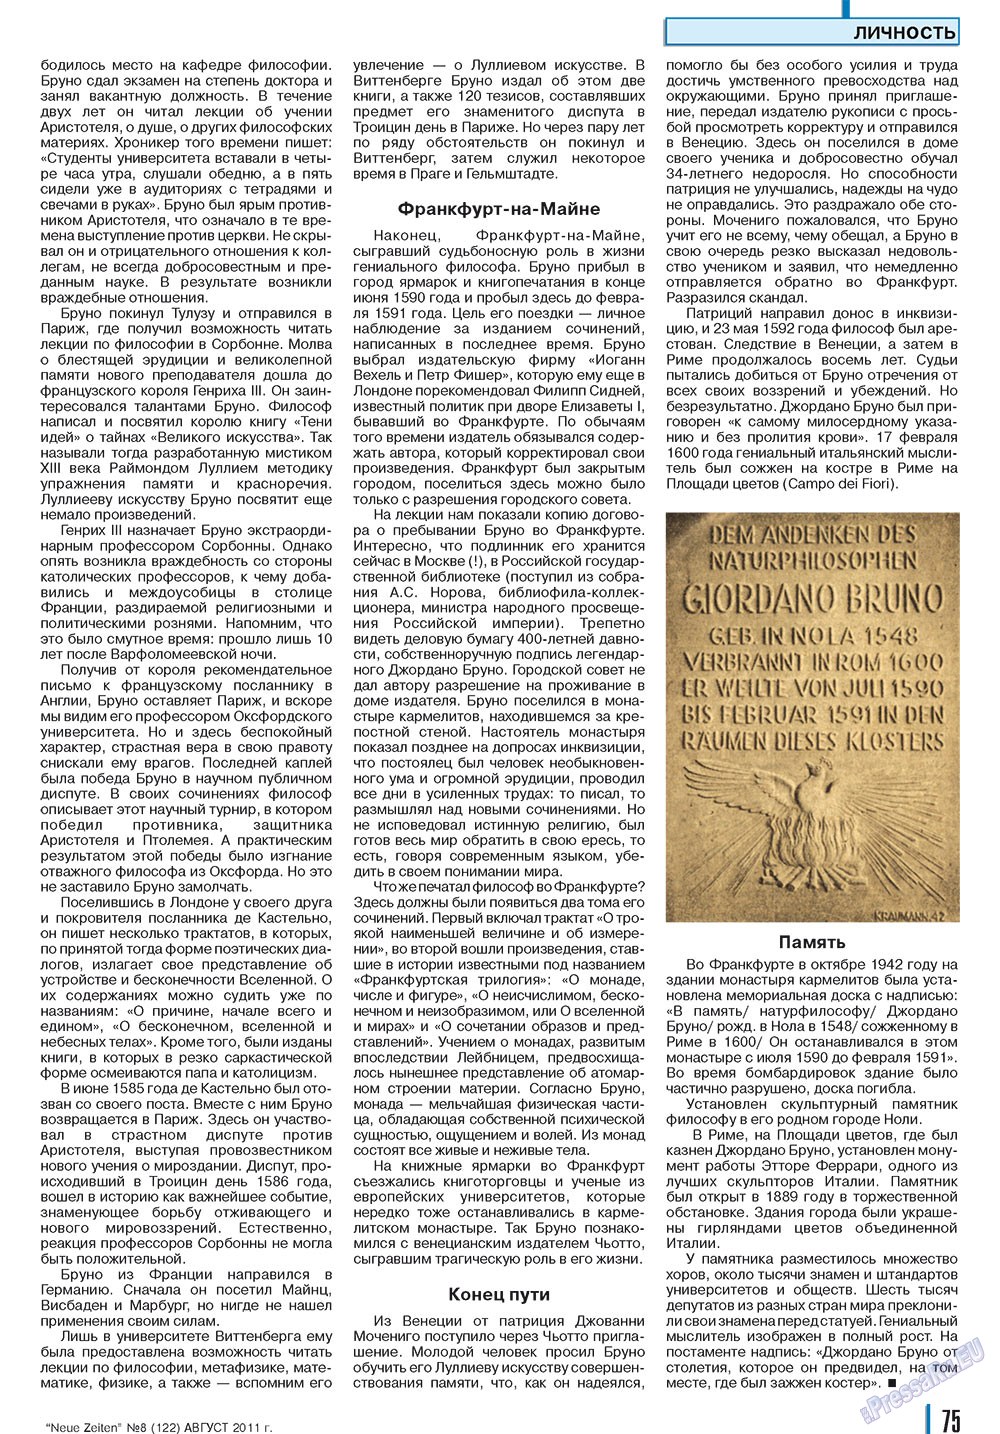 Neue Zeiten (журнал). 2011 год, номер 8, стр. 75